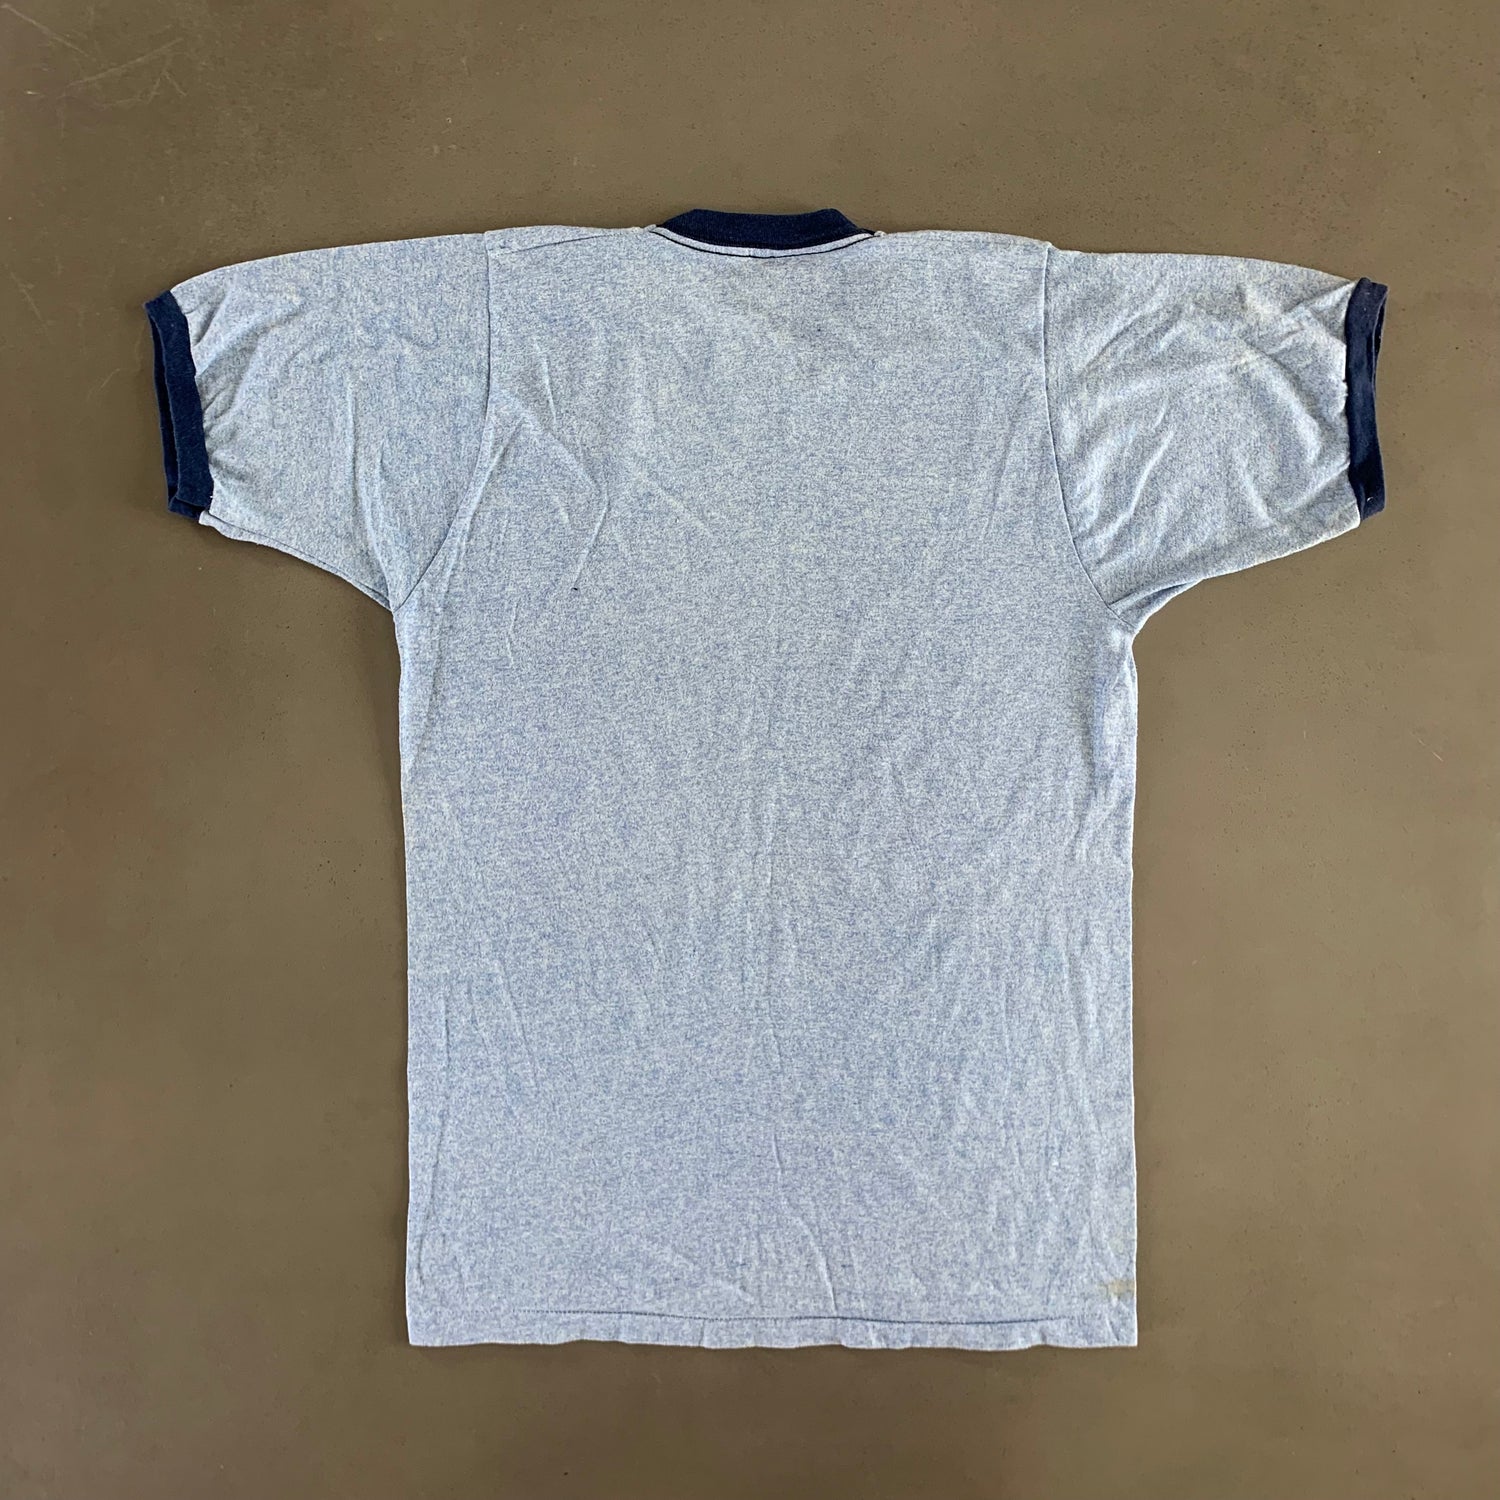 Vintage 1980s Gettysburg T-shirt size Large